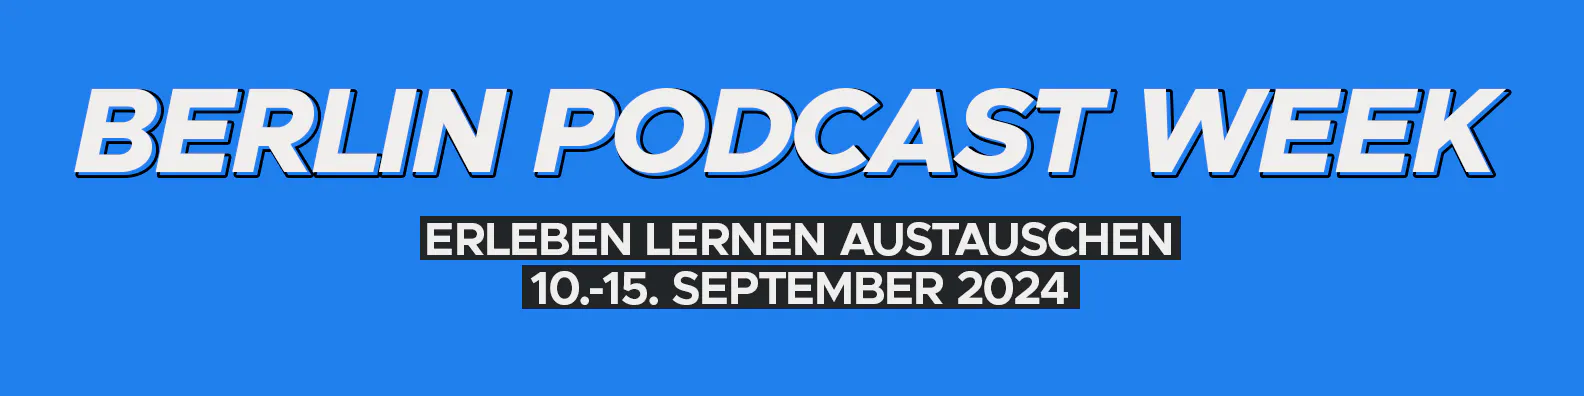 Banner Berlin Podcast Week 2024